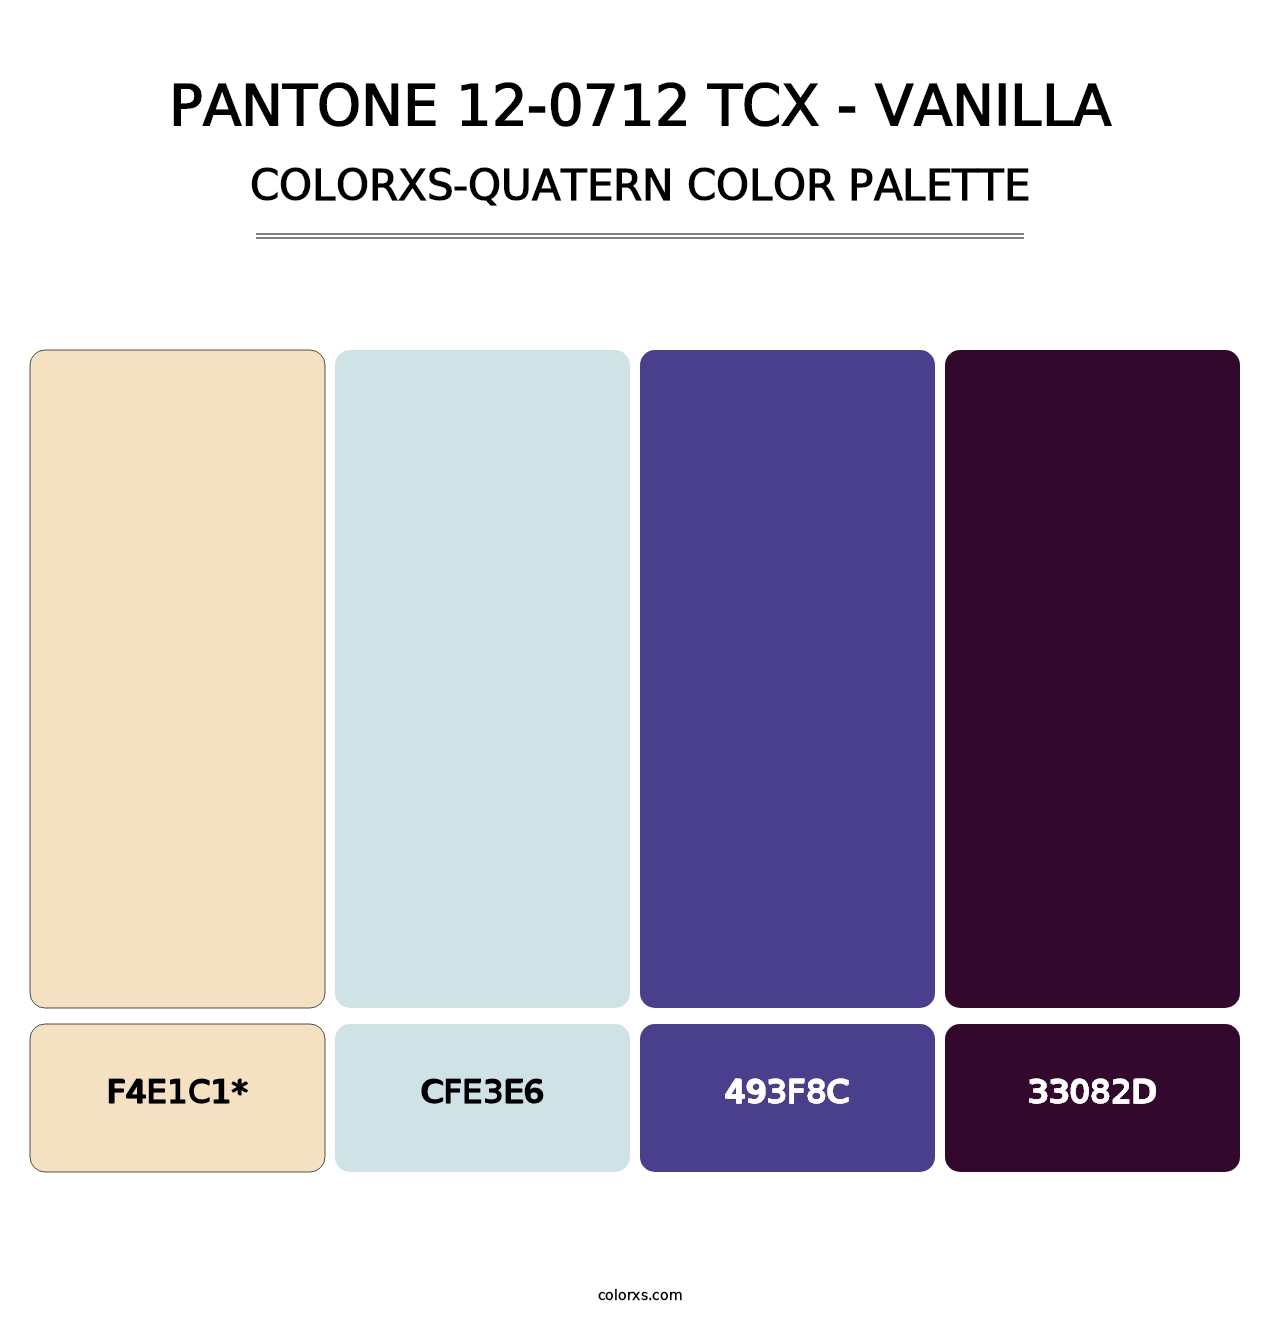 PANTONE 12-0712 TCX - Vanilla - Colorxs Quatern Palette